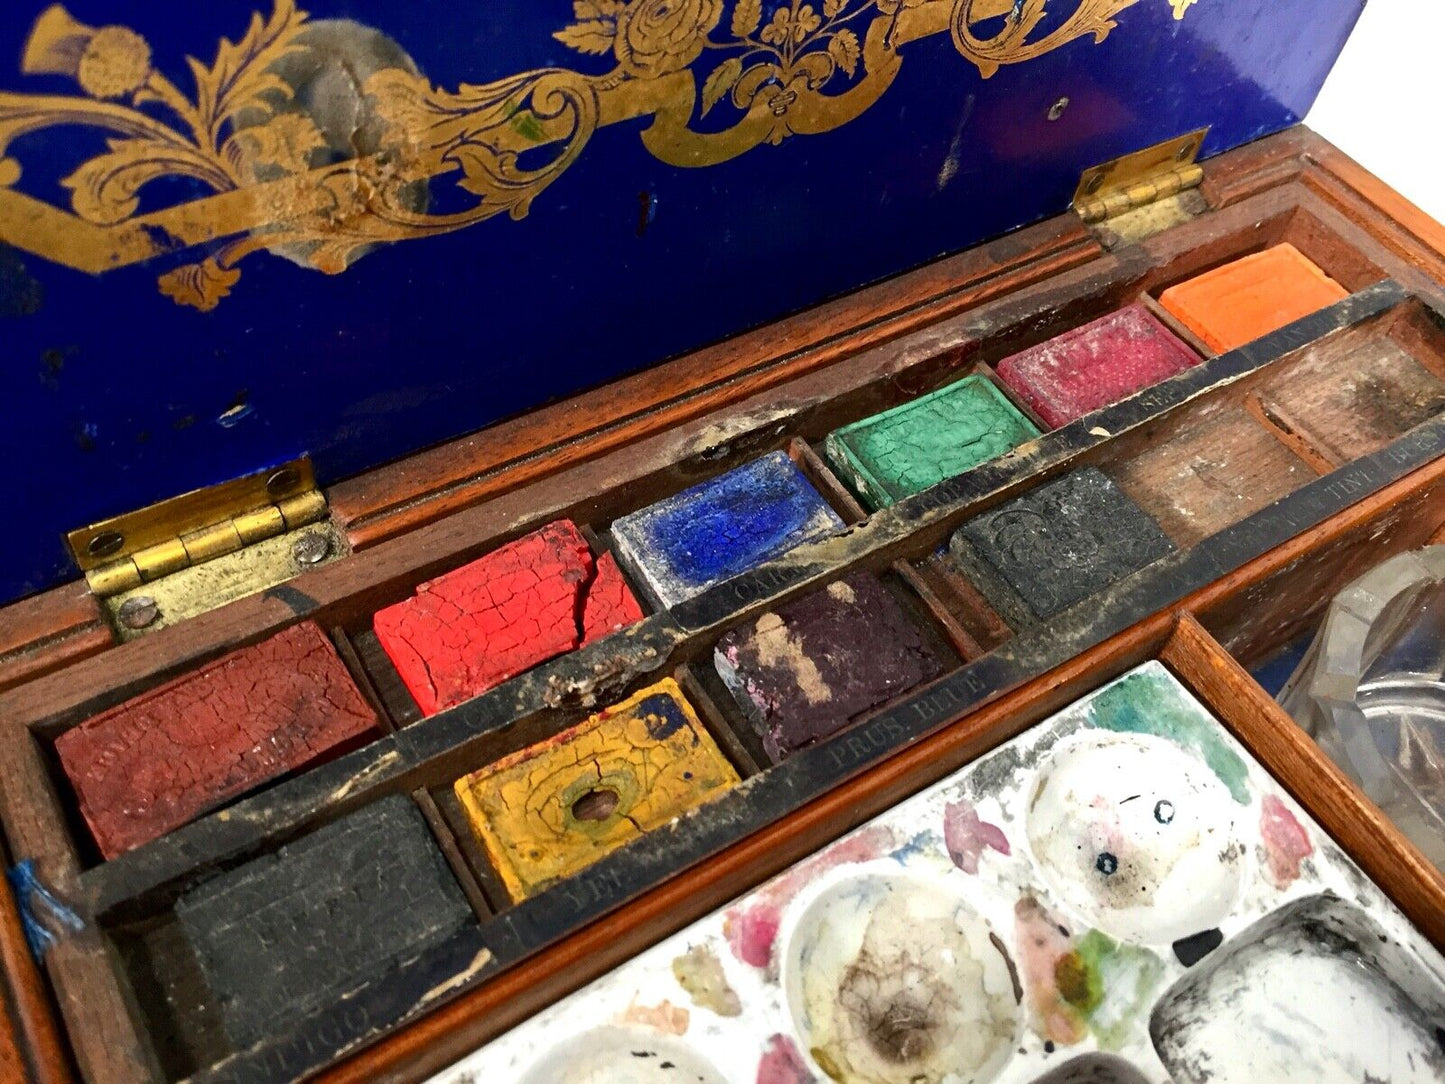 Antique Victorian Mahogany Winsor & Newton Artists Box / Paints / 19th Century